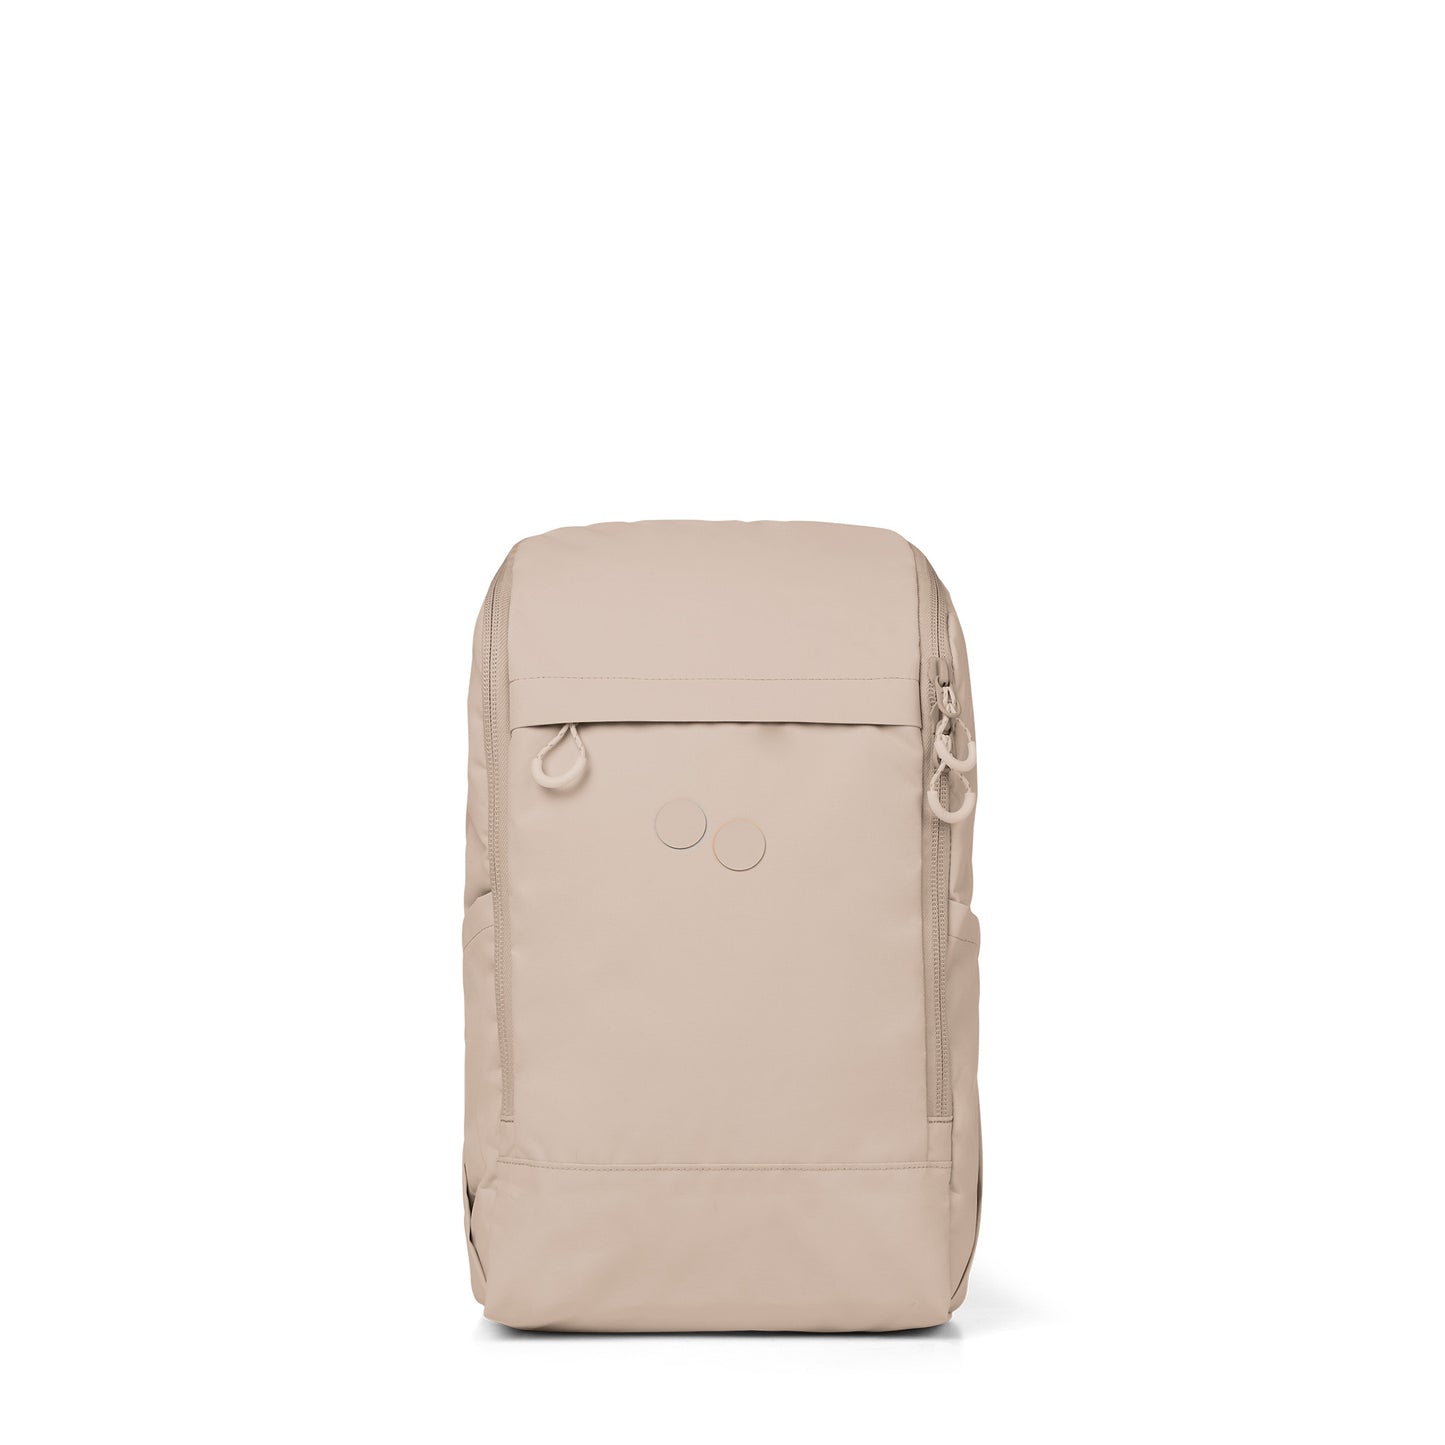 pinqponq-backpack-Purik-Caramel-Khaki-front